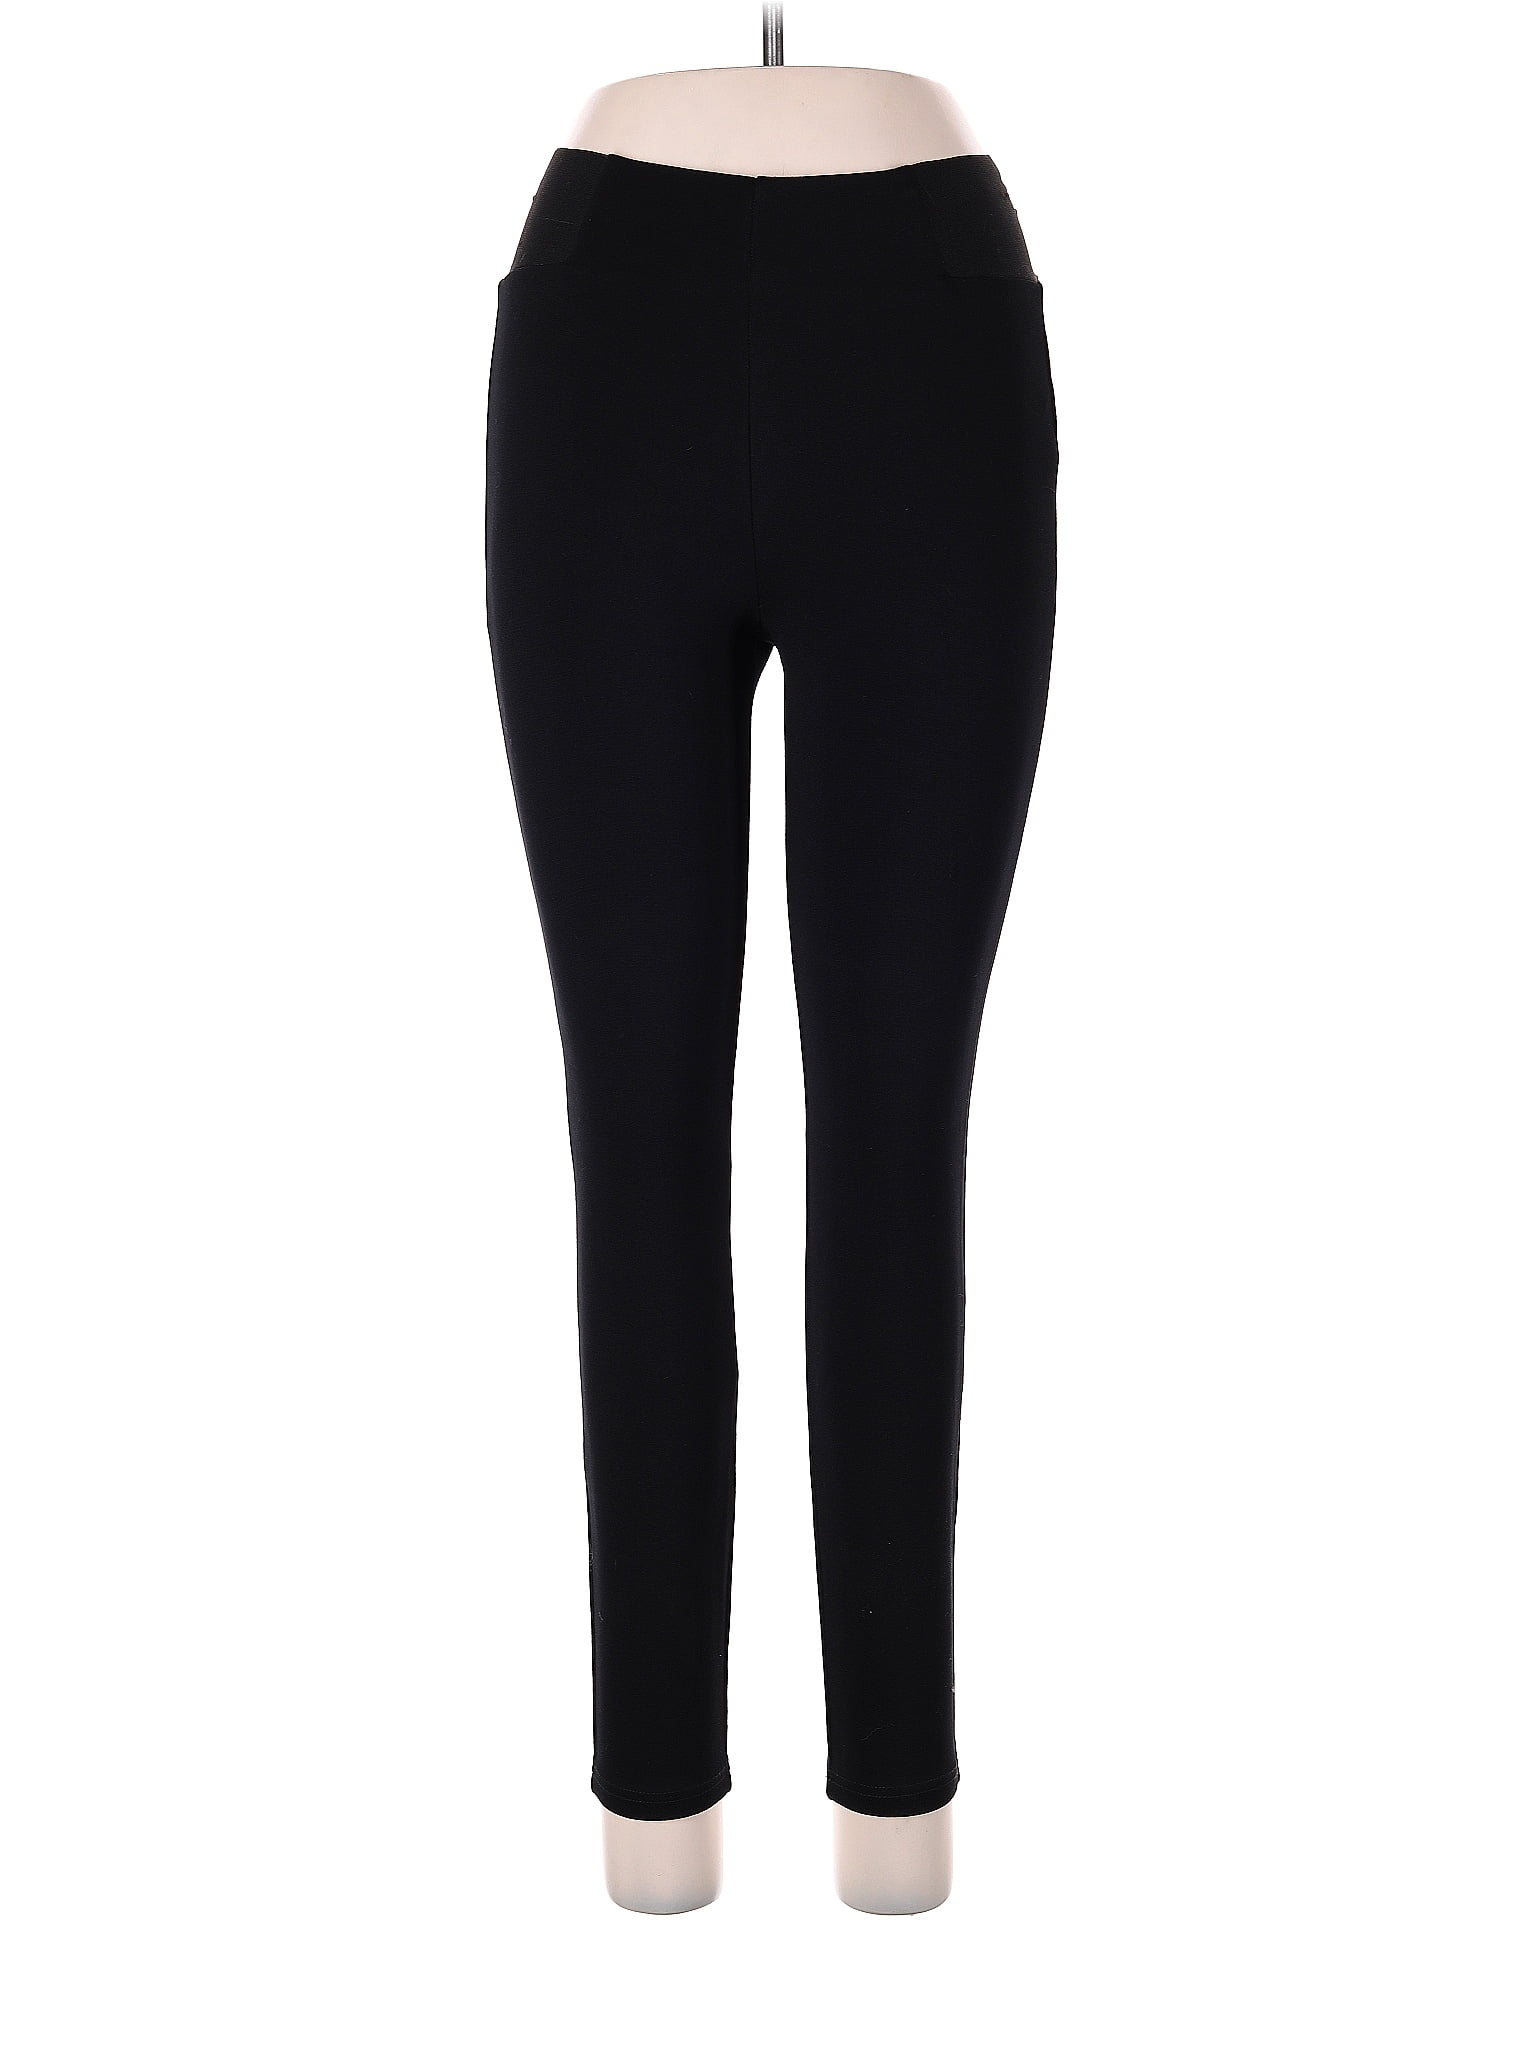 PINK - Victoria's Secret Leggings Black - $23 (58% Off Retail